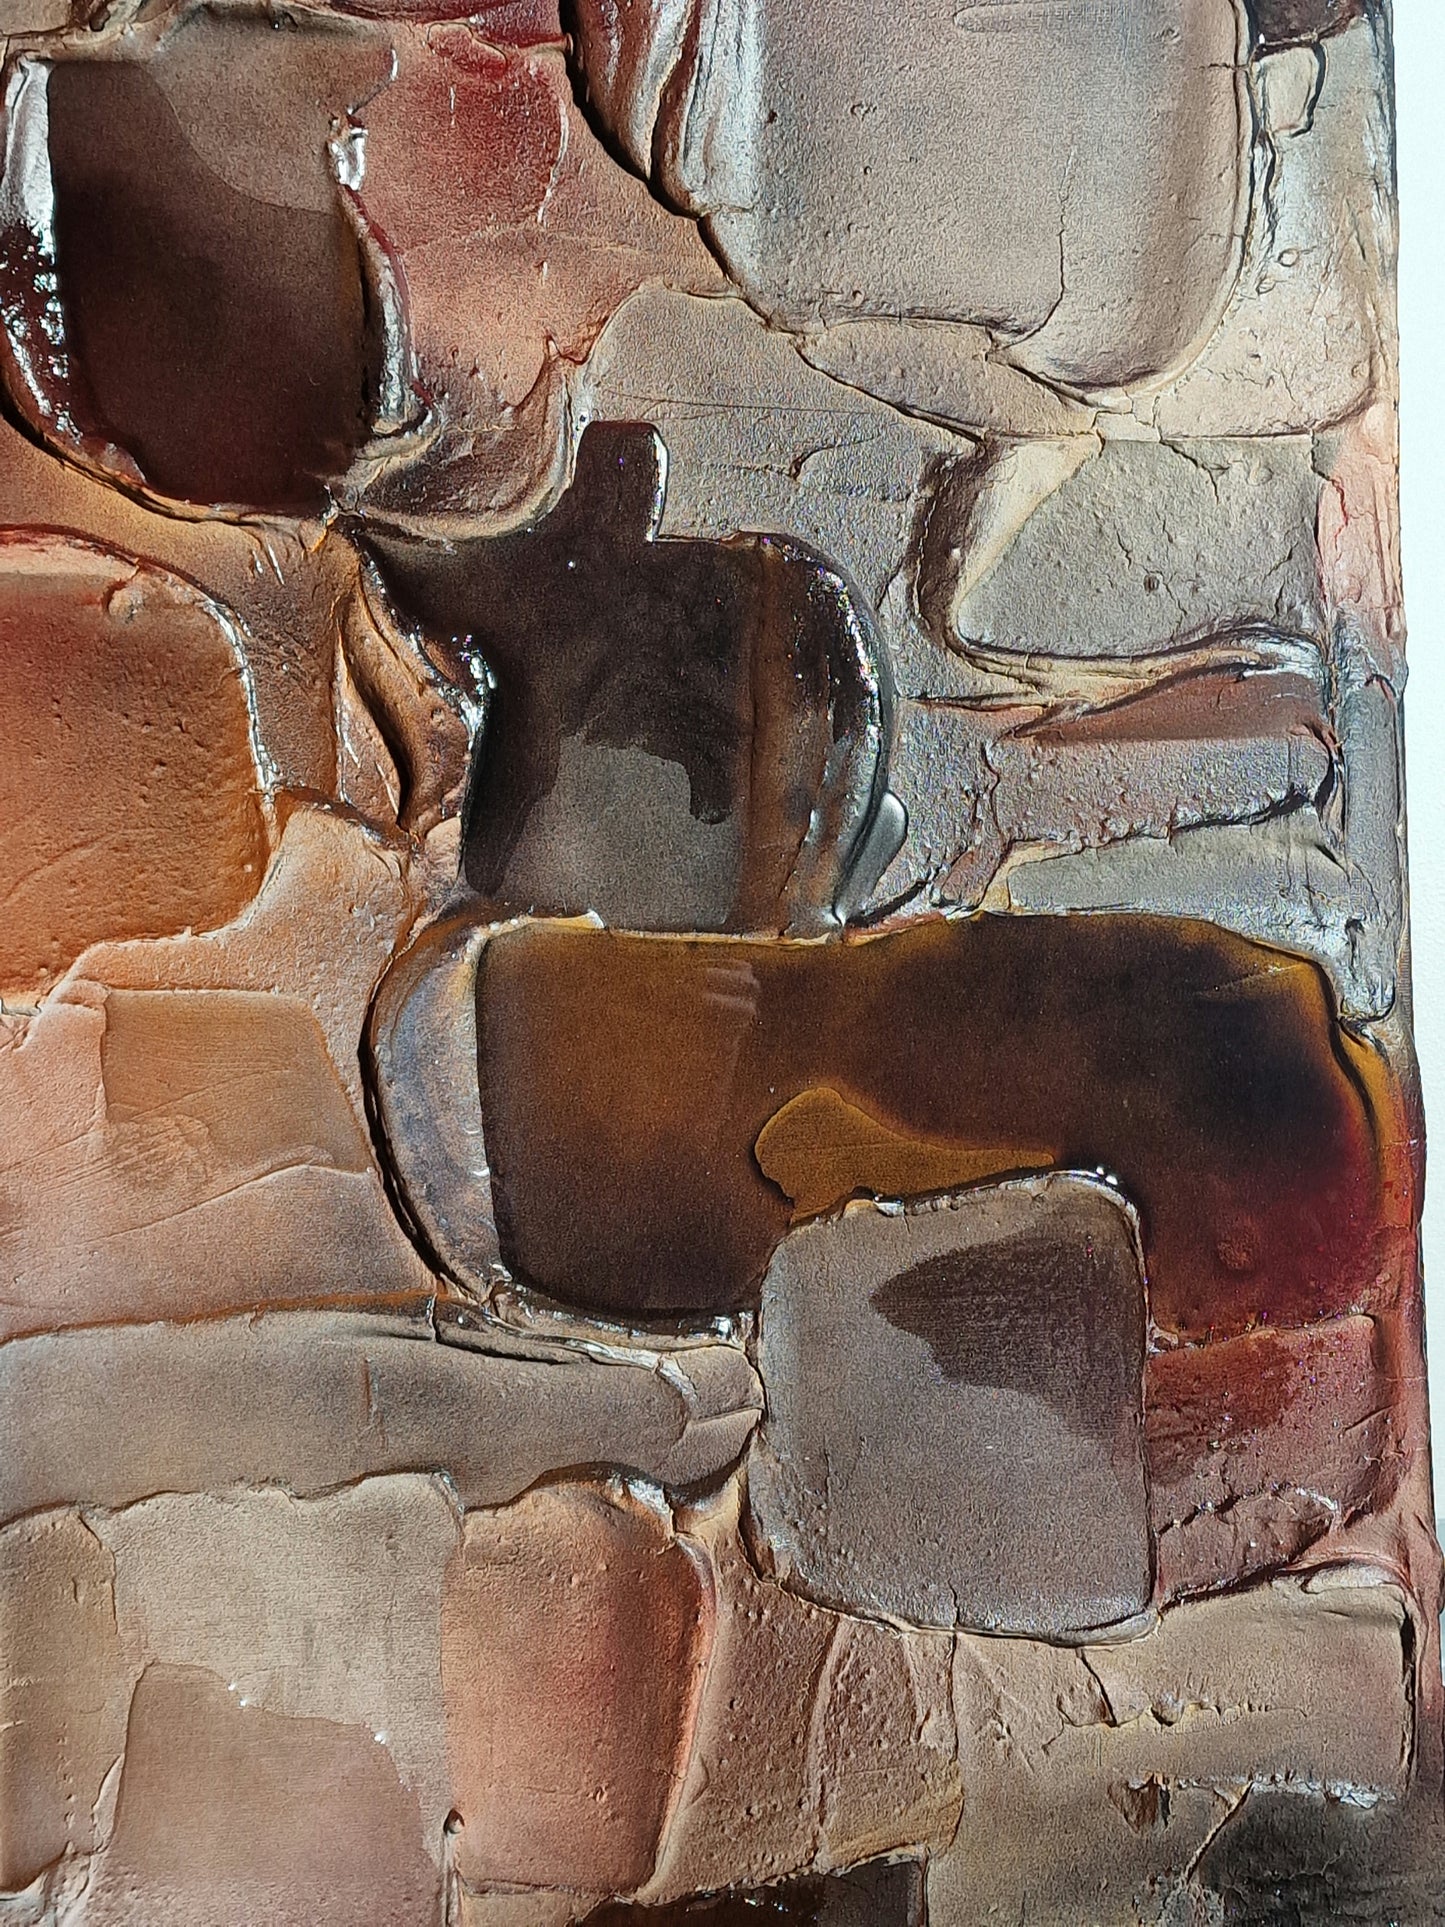 Original abstract painting "Dune" 90x90cm